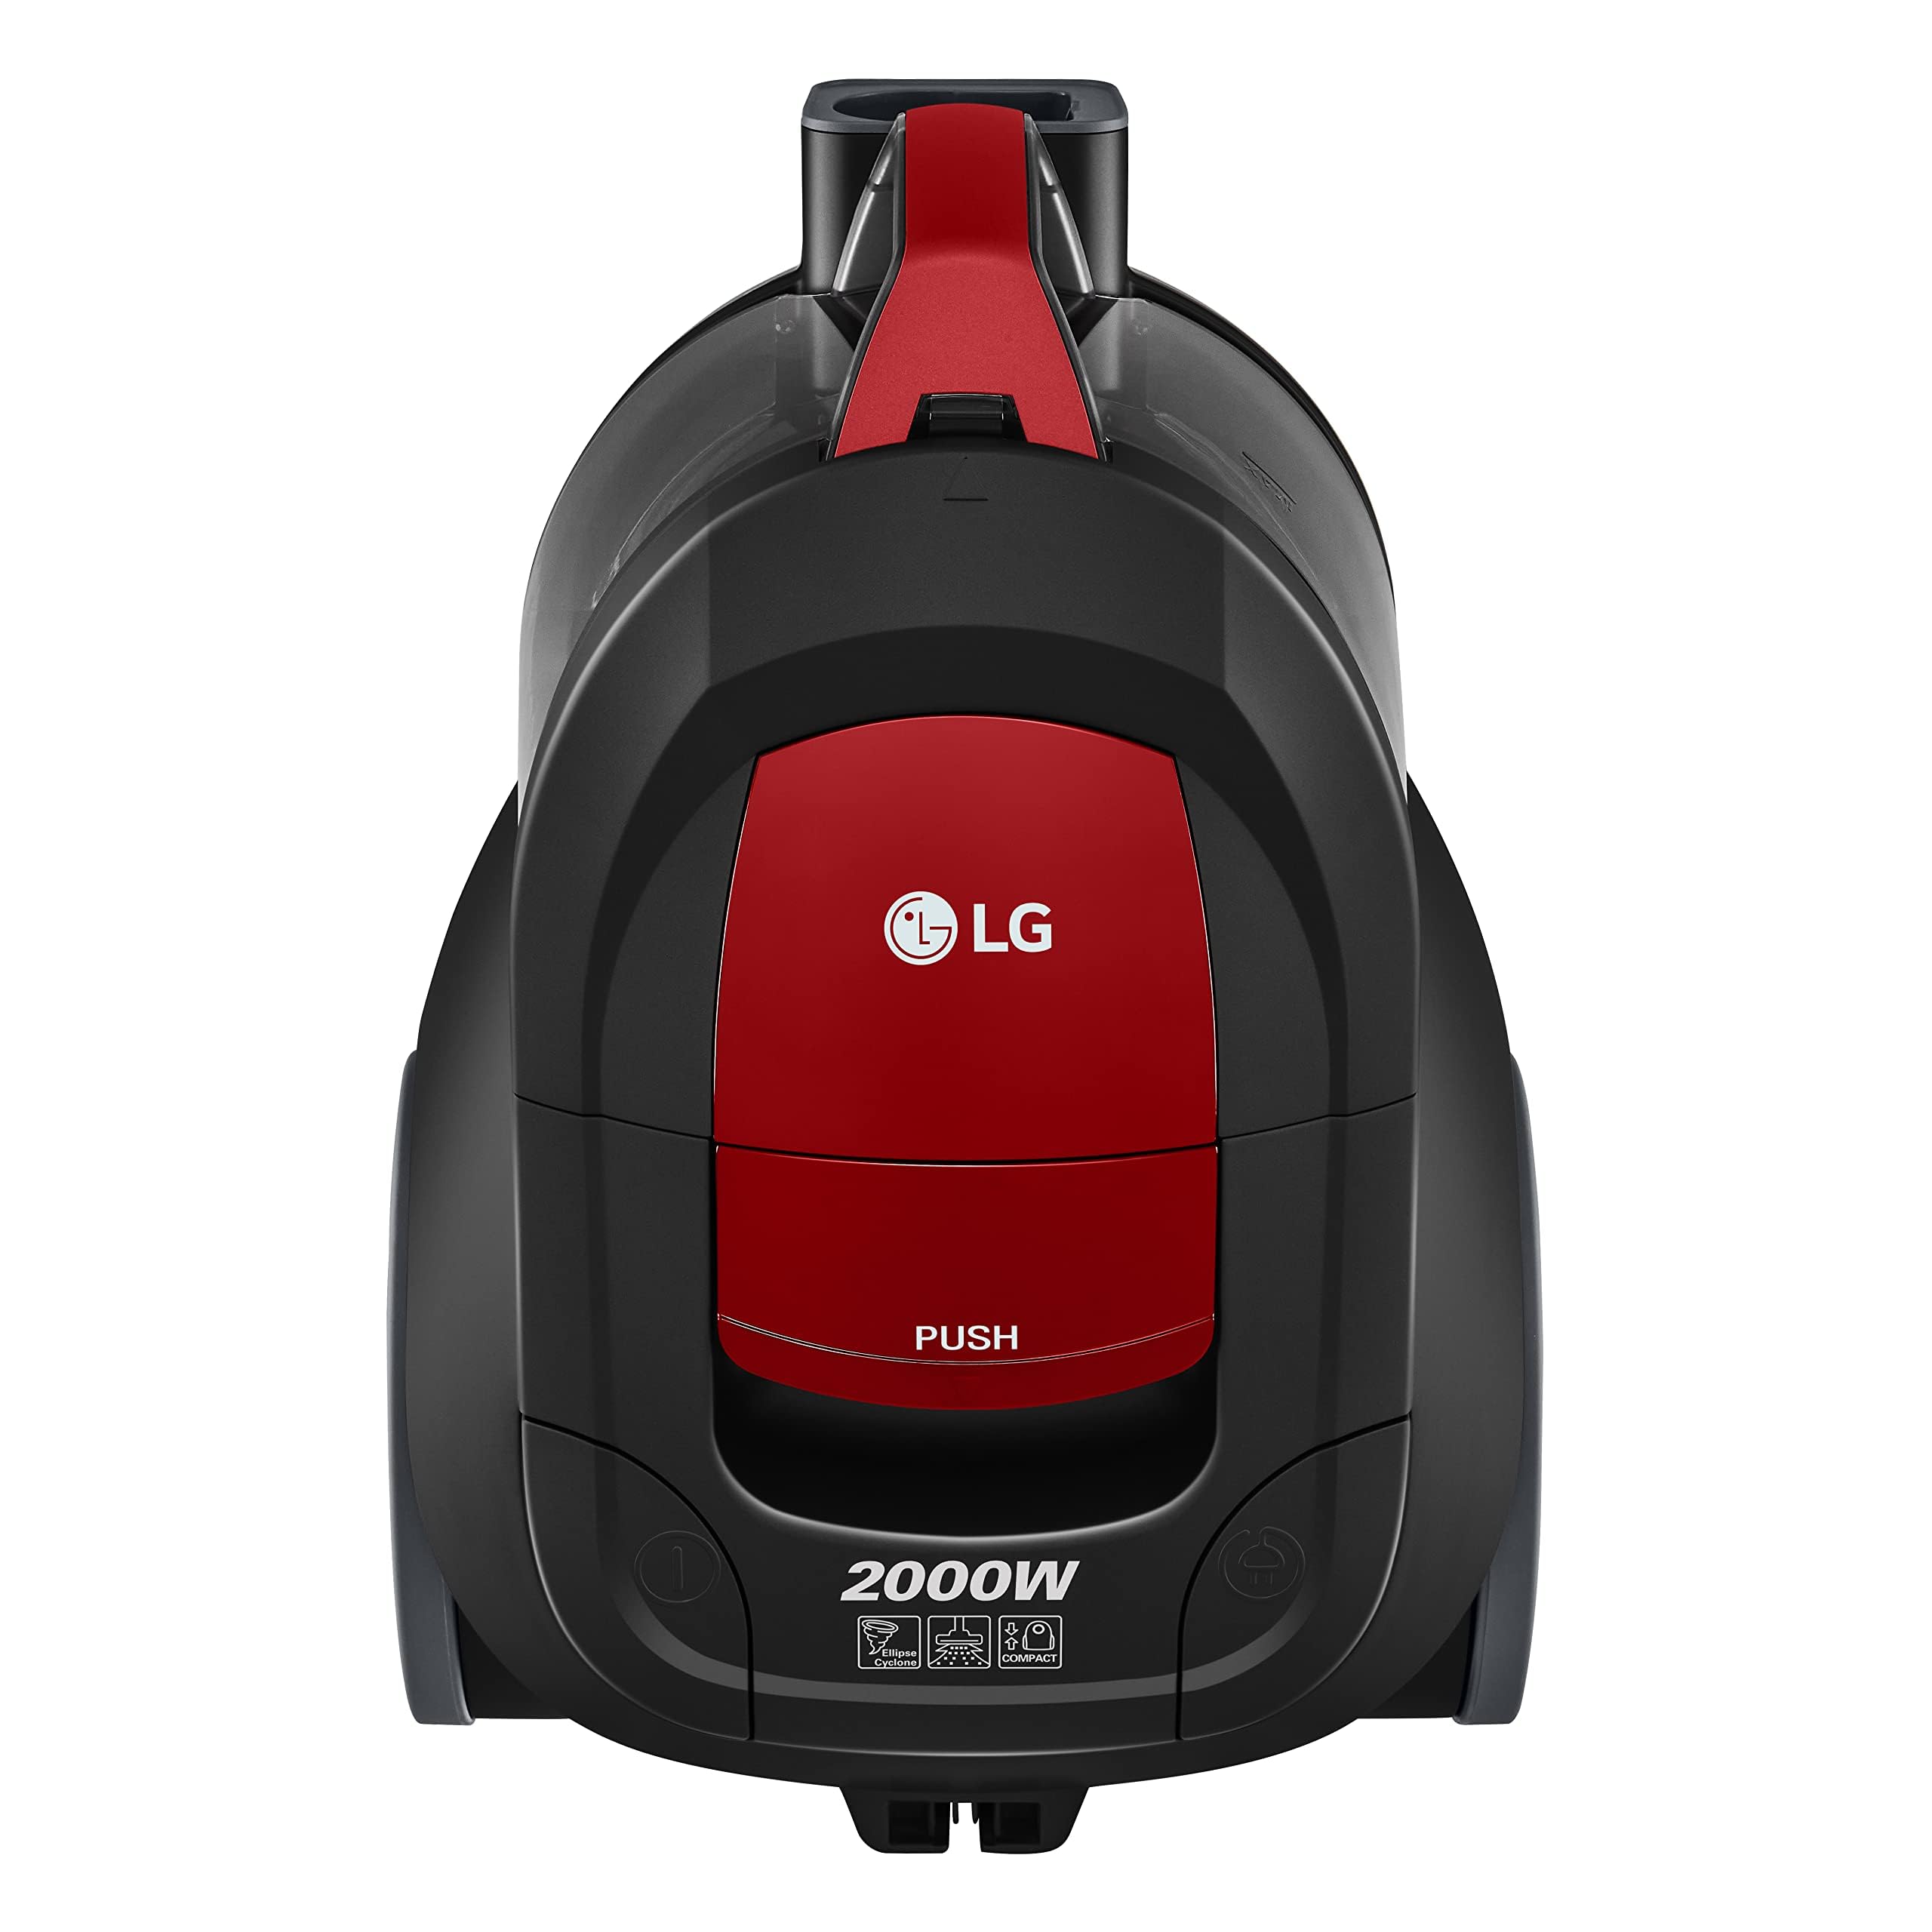 LG Bagless Vacuum Cleaner, 1.3 Liter Dust Capacity, Long Lasting Suction Power, 2000 Watt, Pearl Sparkle Red إل جي مكنسة كهربائية بدون كيس سعة 1.3 لتر من الغبار، قوة شفط تدوم طويلا، 2000 واط، احمر لؤلؤي